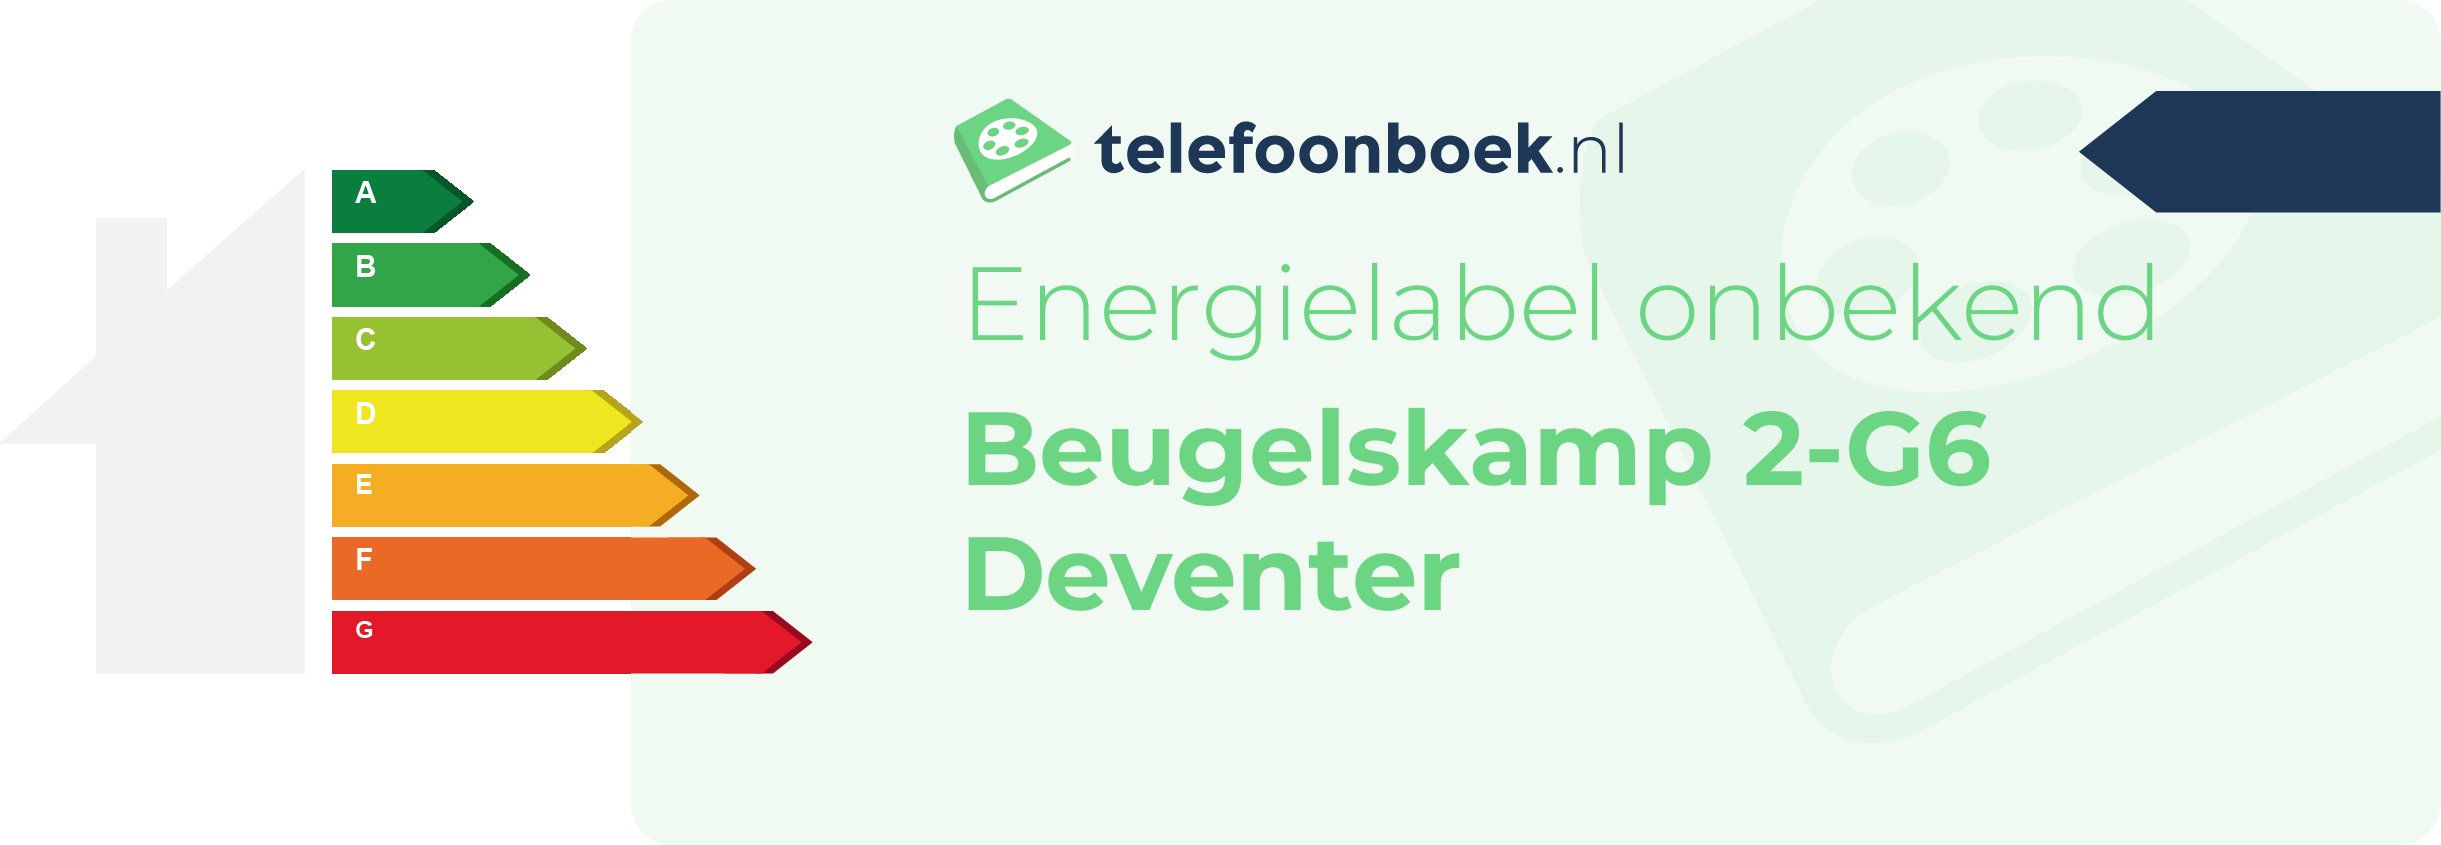 Energielabel Beugelskamp 2-G6 Deventer